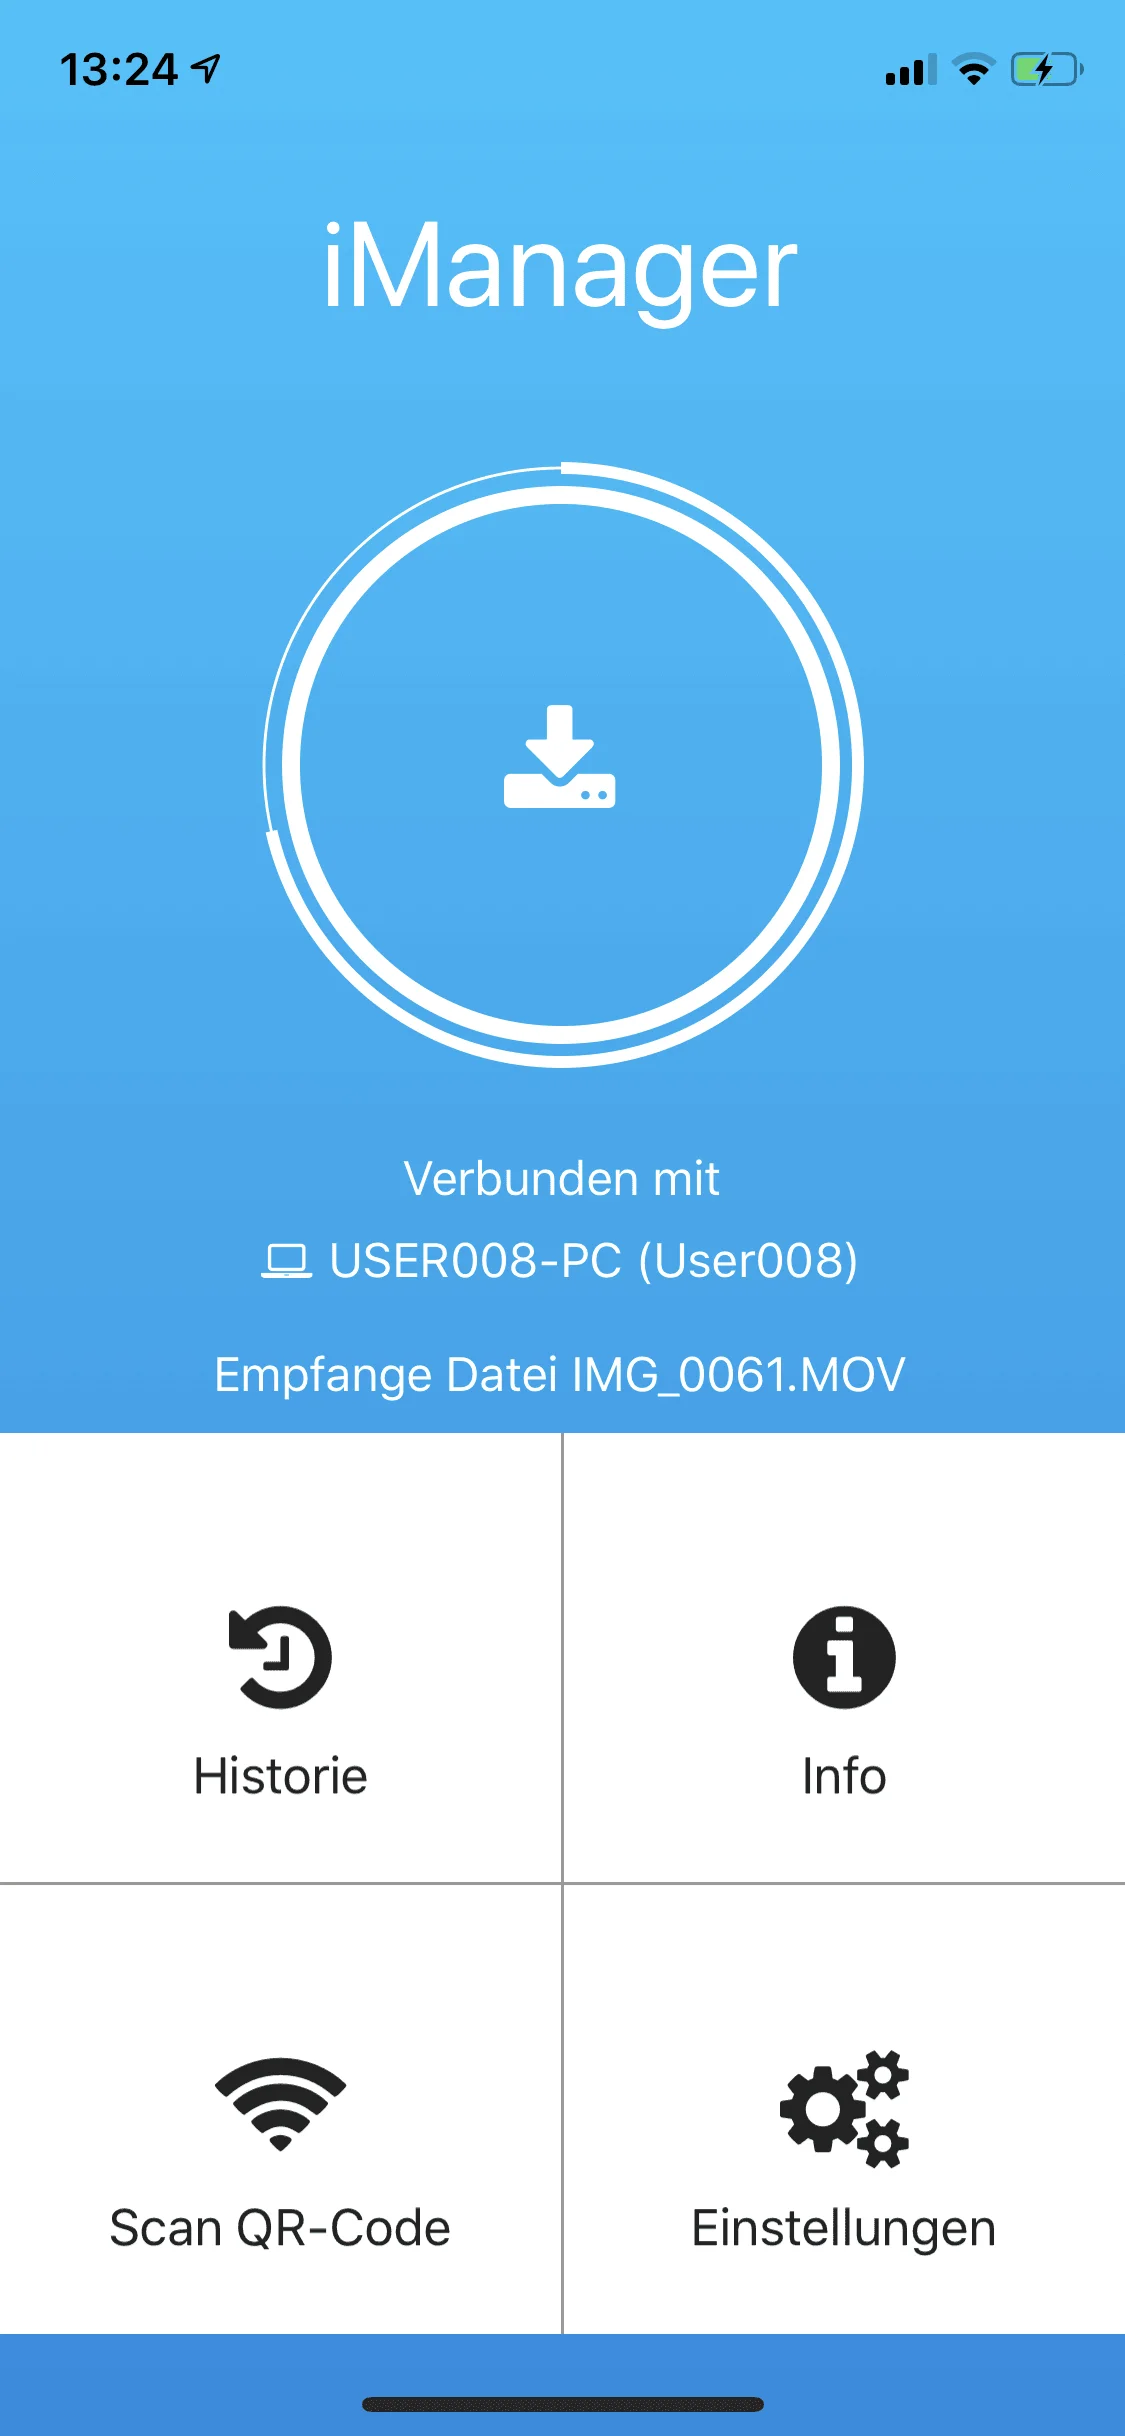 iManager App empfängt Kontakte